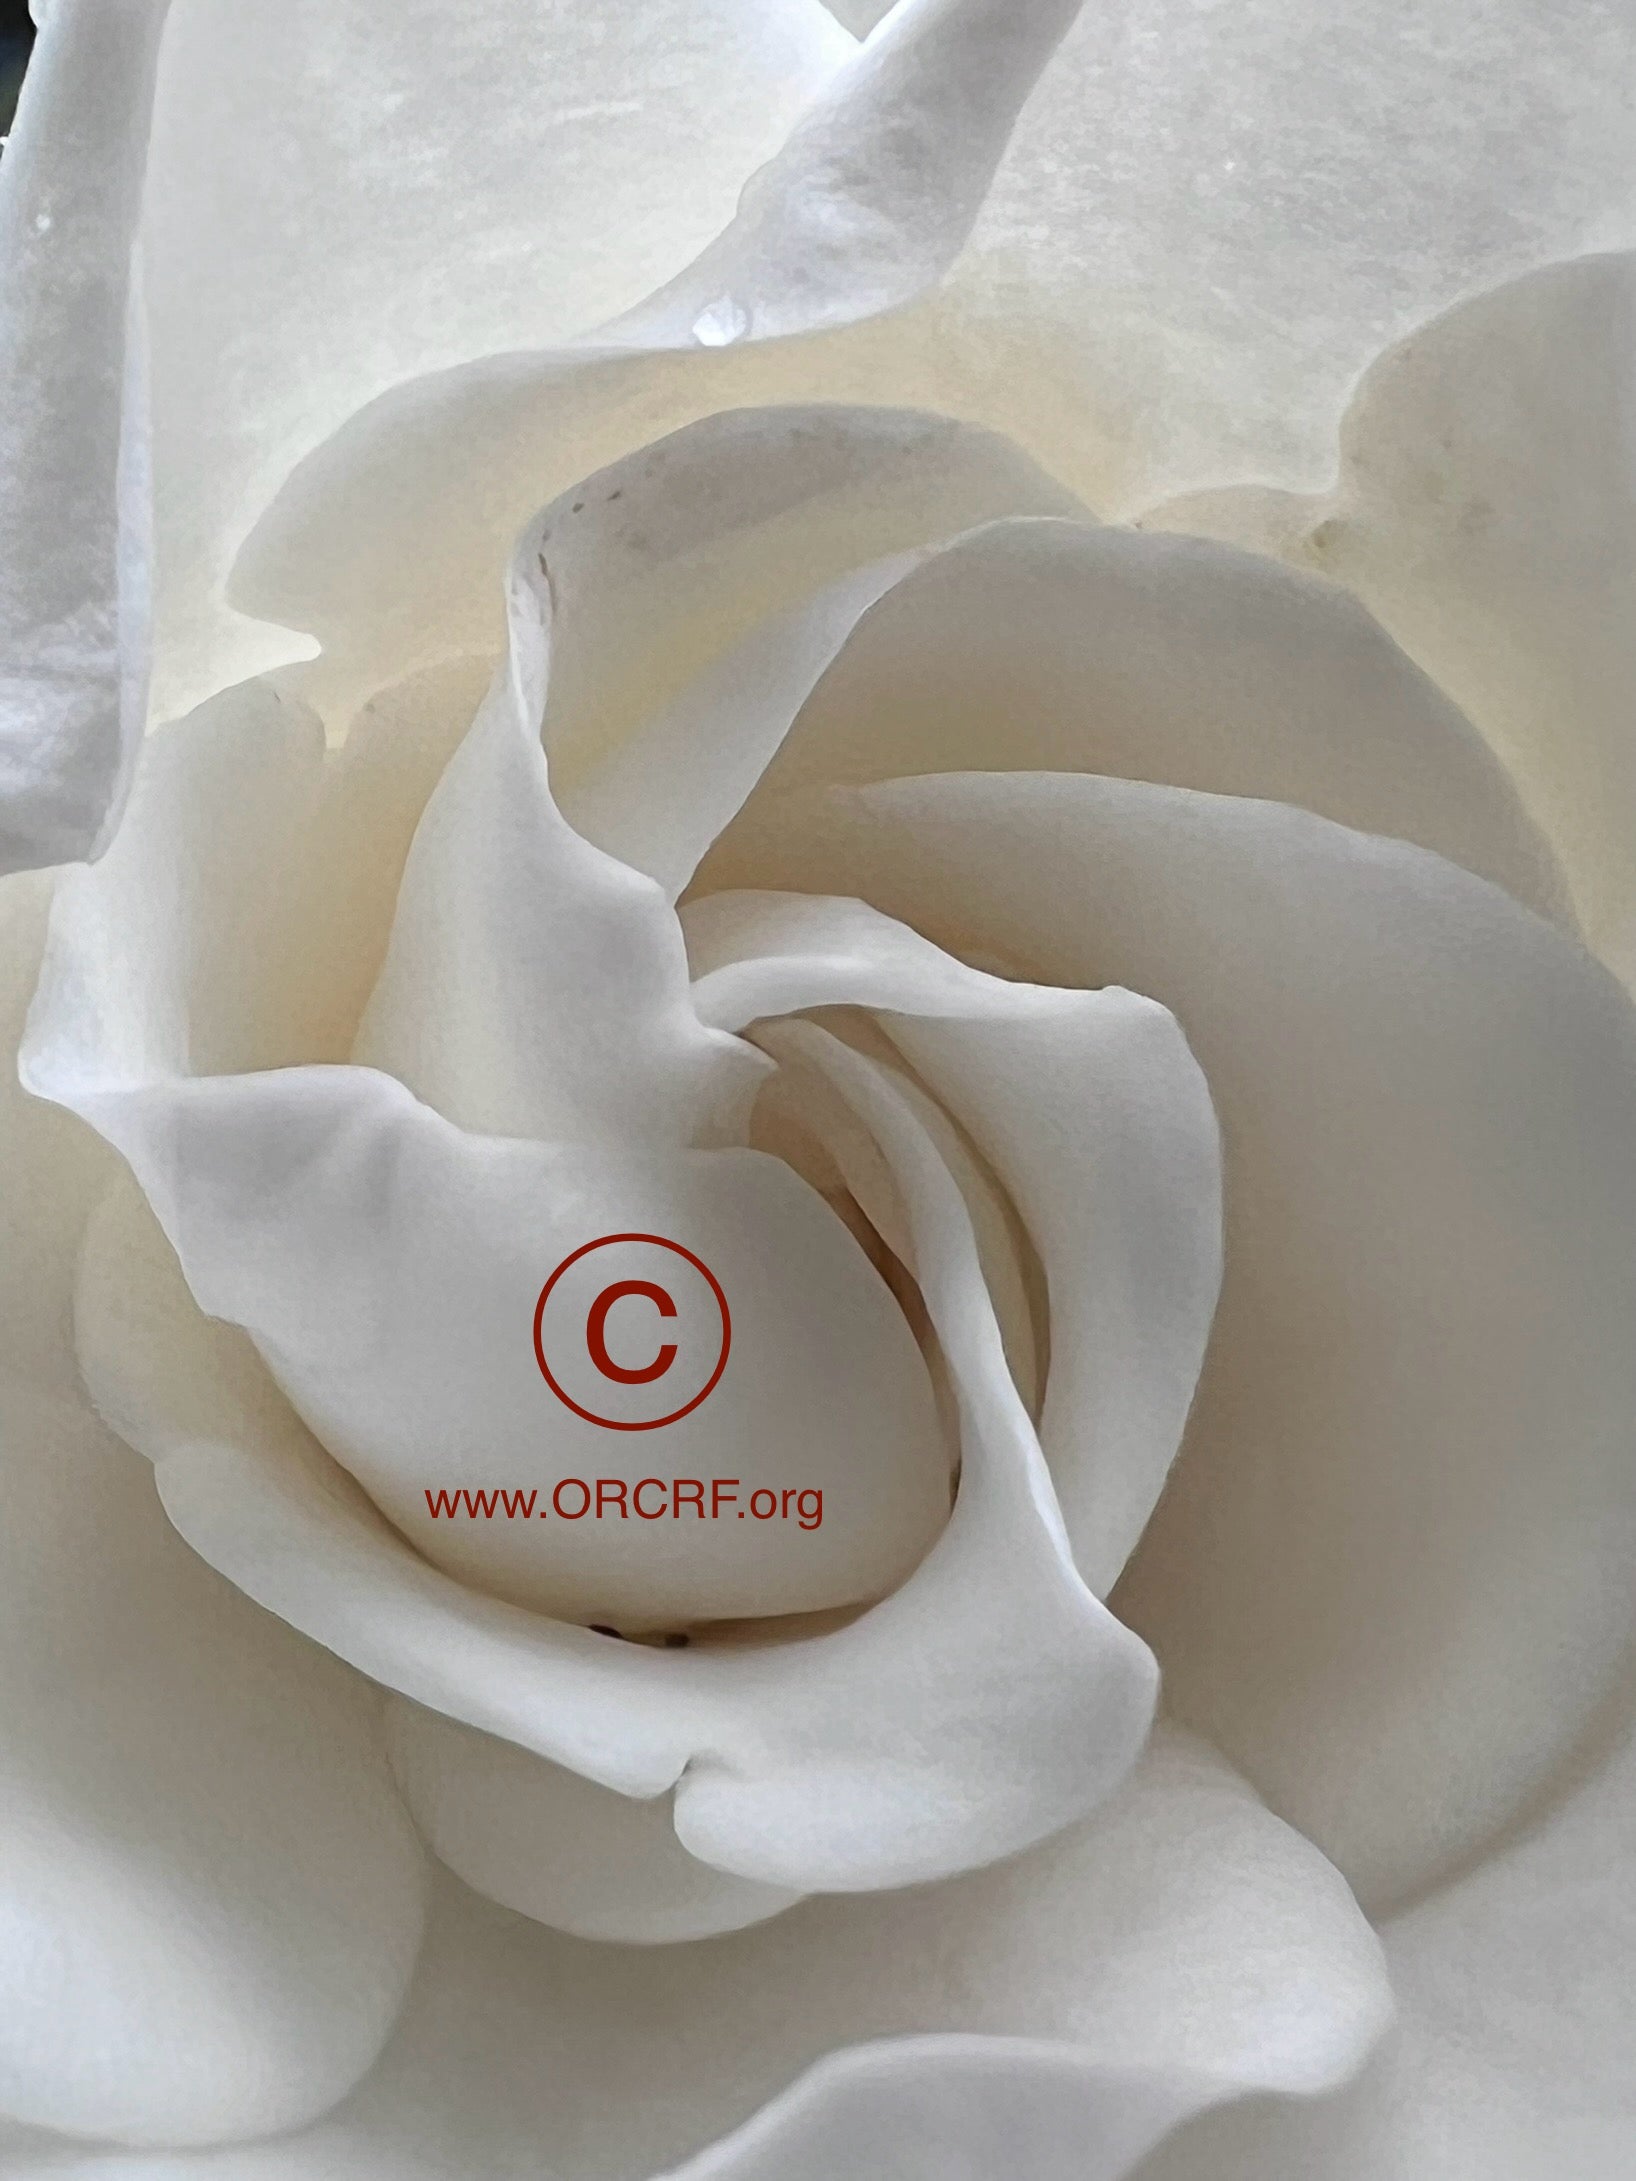 ORCRF ROSE / NFT Digital Art Image 0761 - Image Award Winning Photography by JARVIS Creative & Media Studios